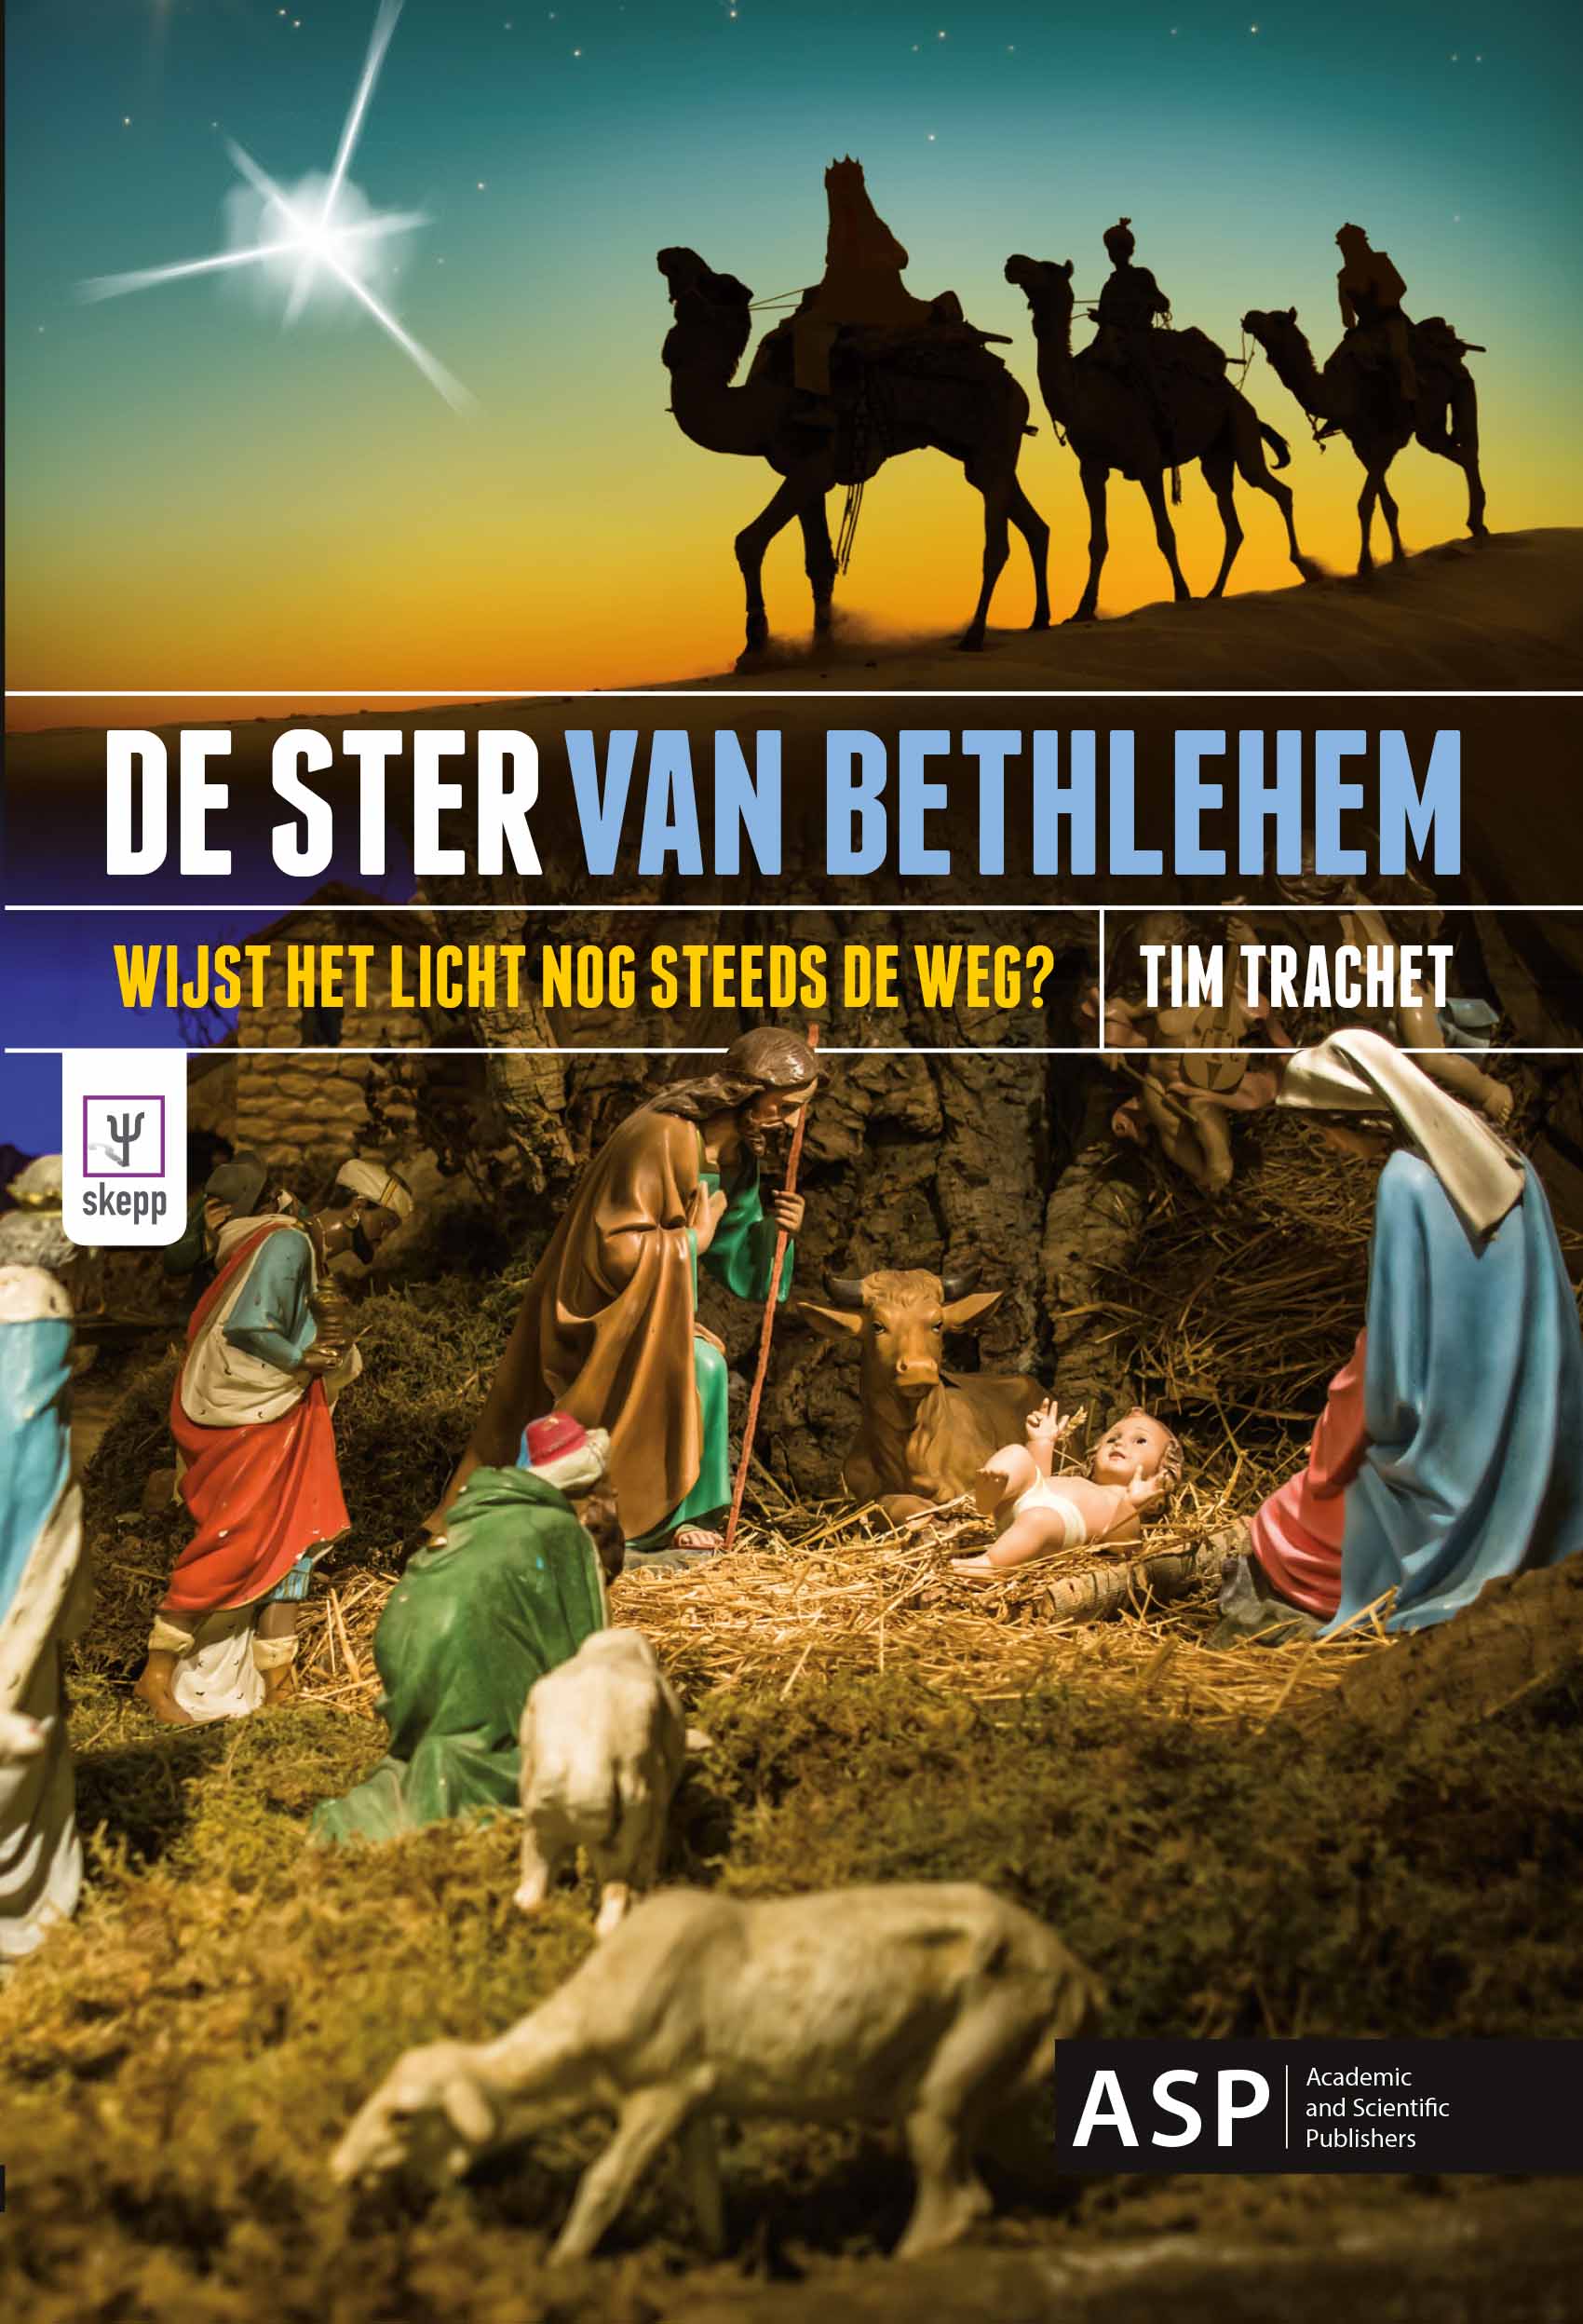 DE STER VAN BETHLEHEM